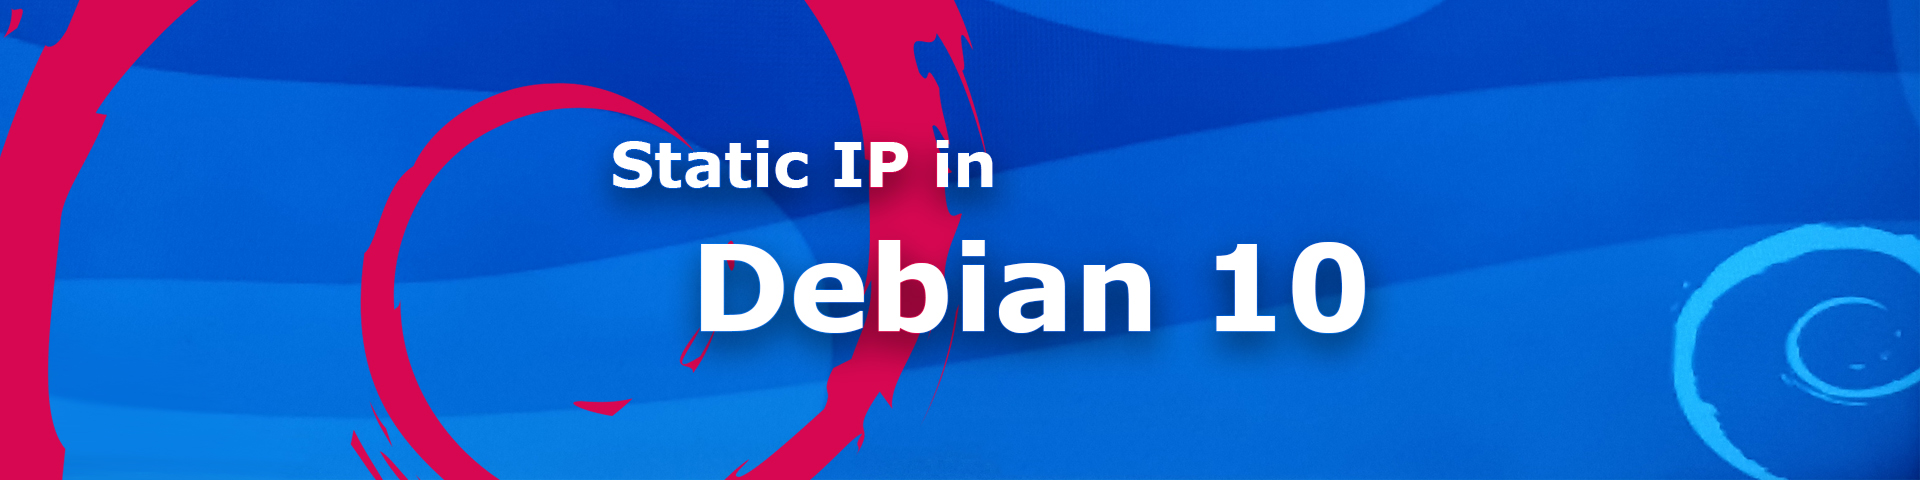 Static IP in Debian